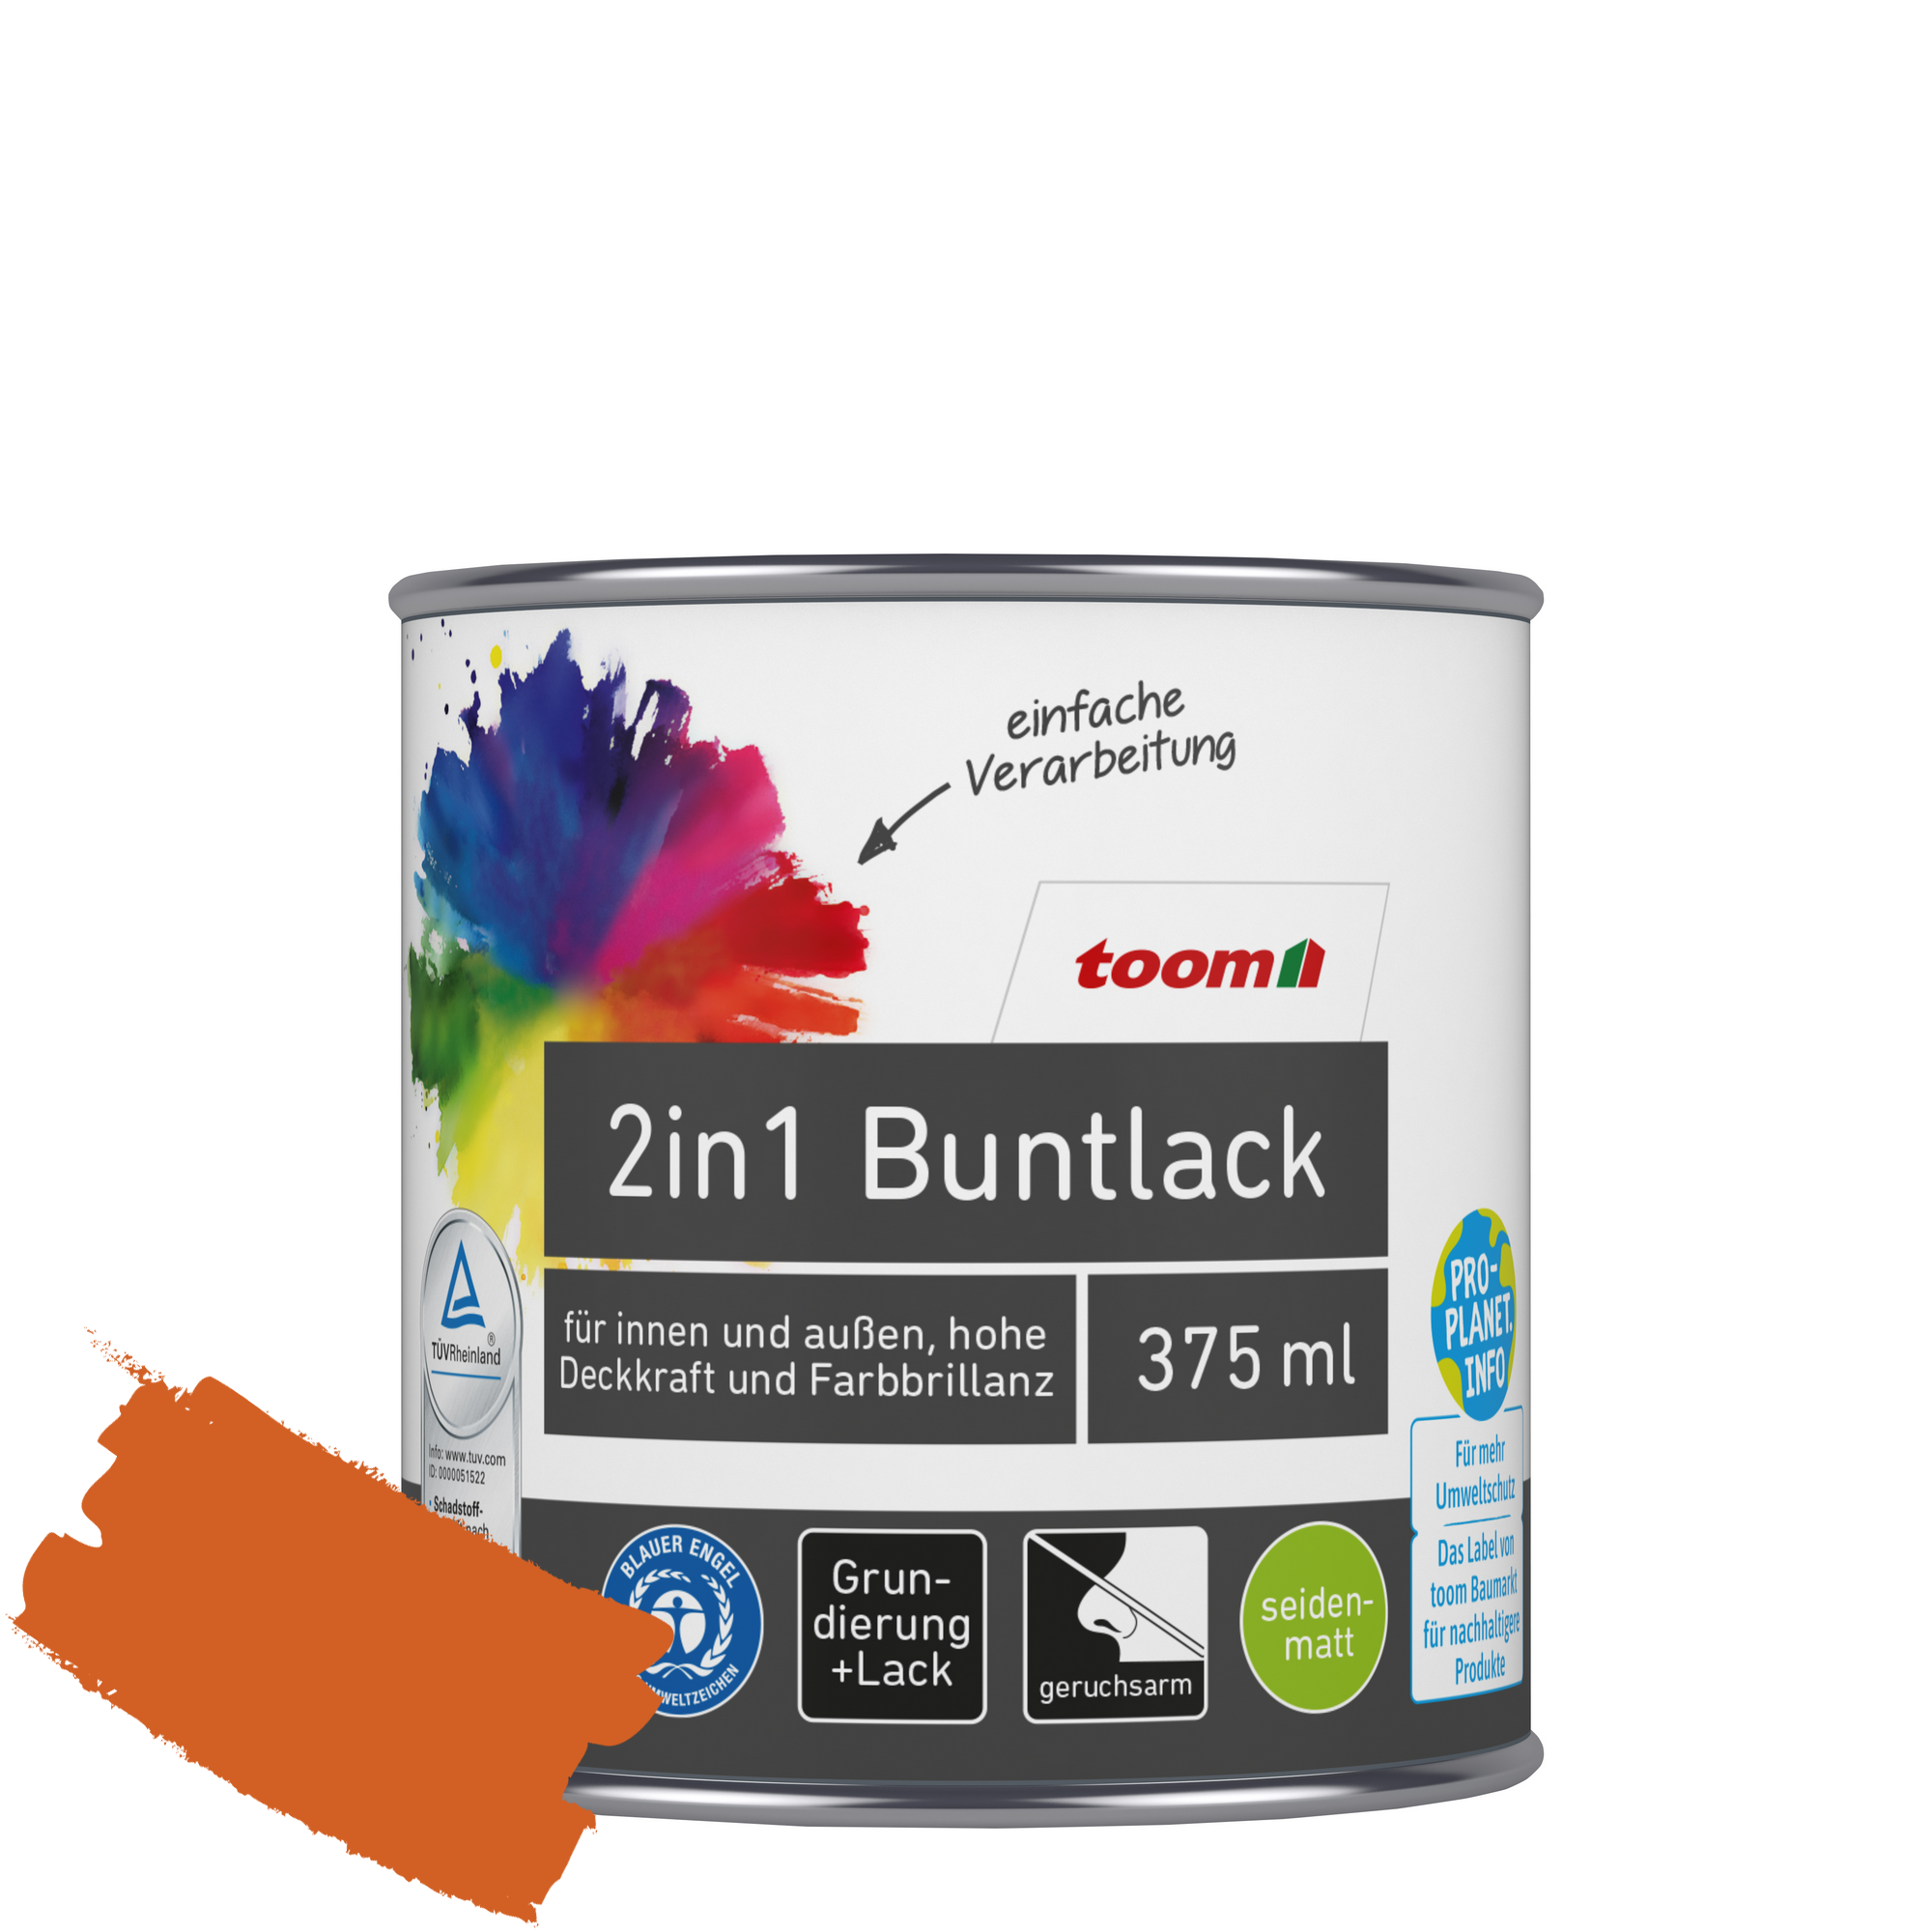 2in1 Buntlack 'Feuerglut' orange seidenmatt 375 ml + product picture